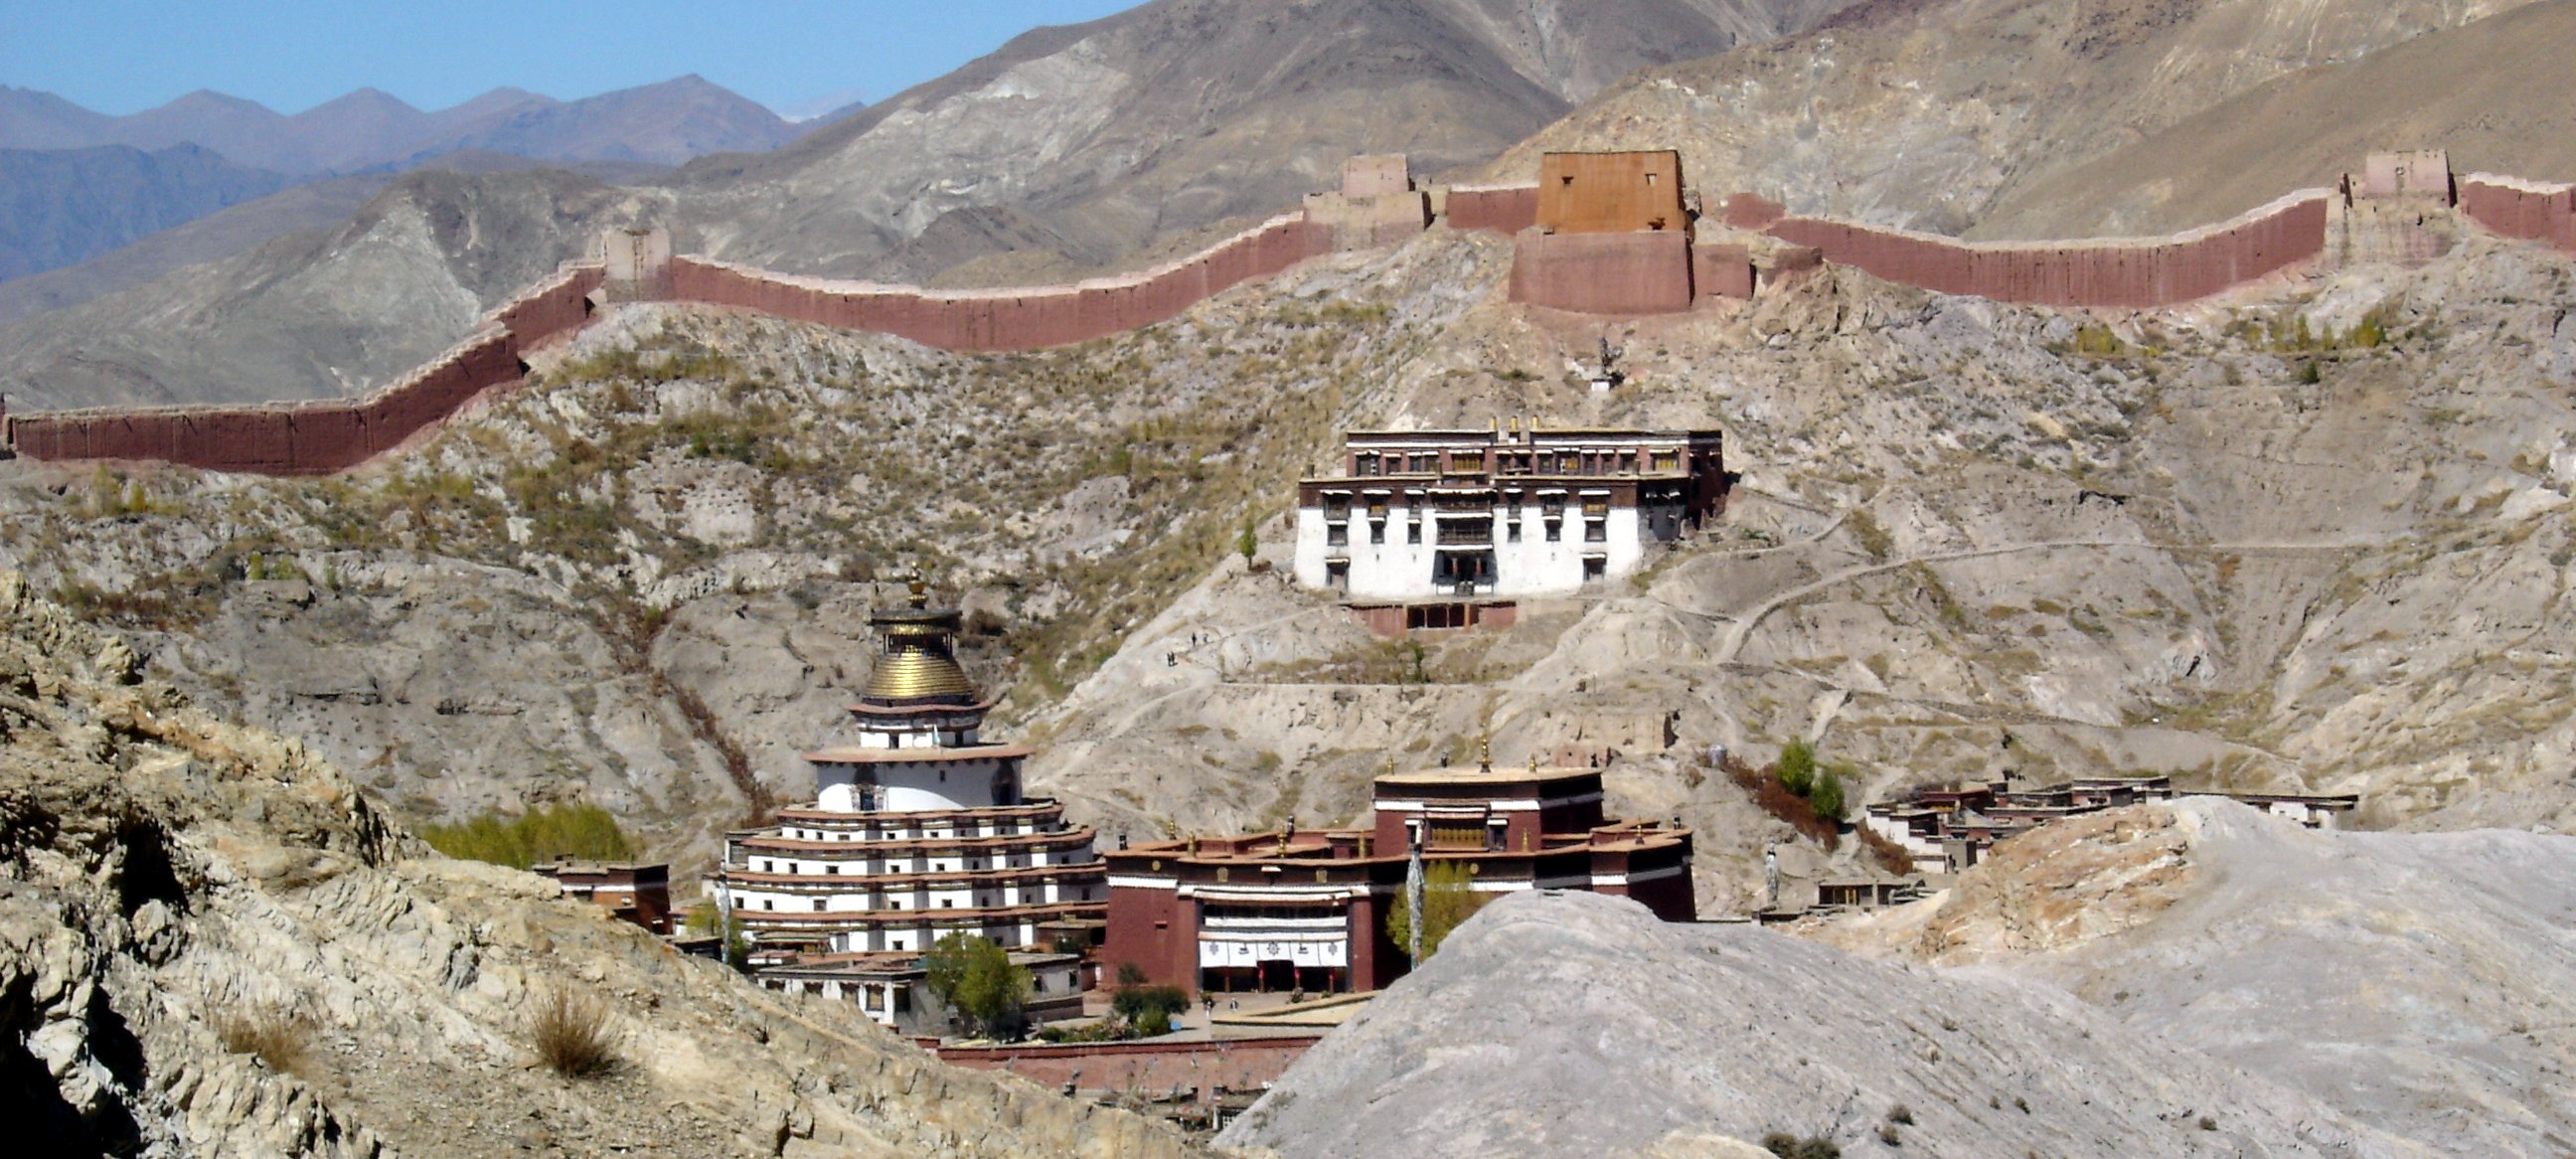  Tashi Lhunpo monastery Shigatse